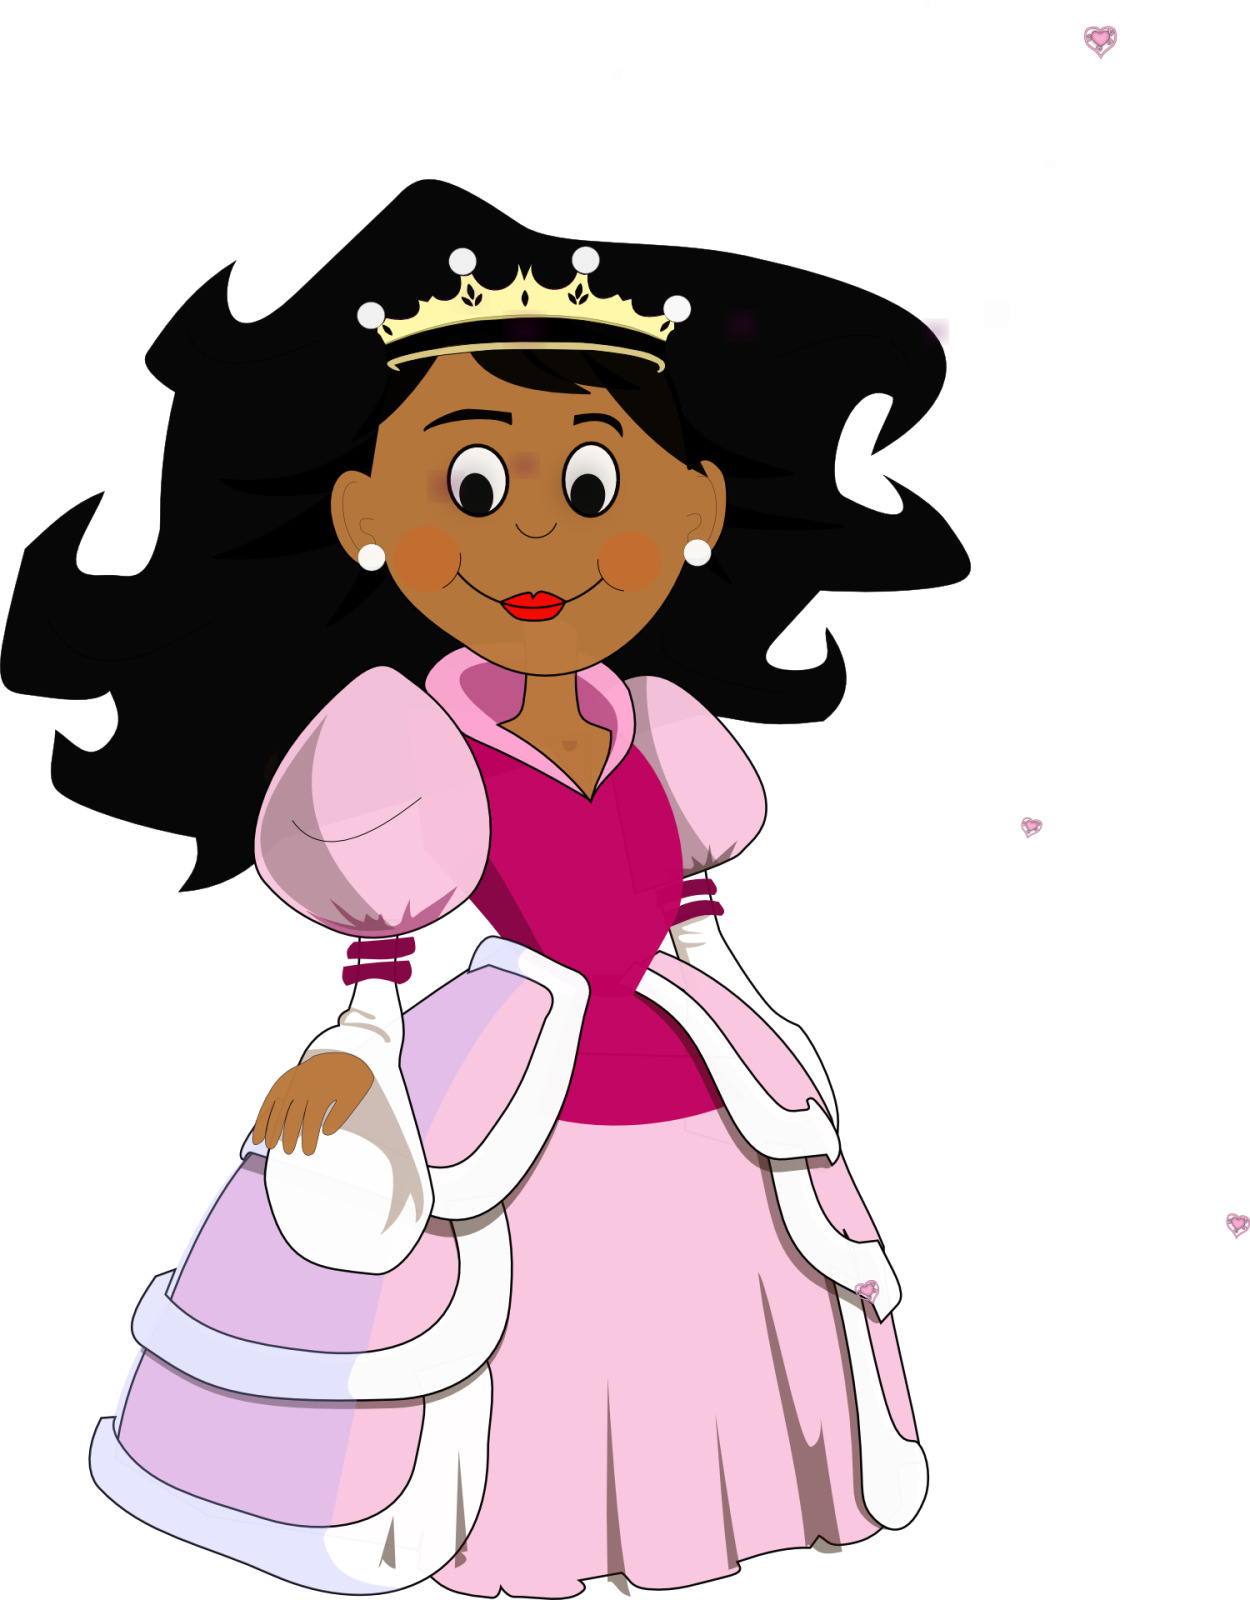 Liken a Princess Ariel with Prince - Original image